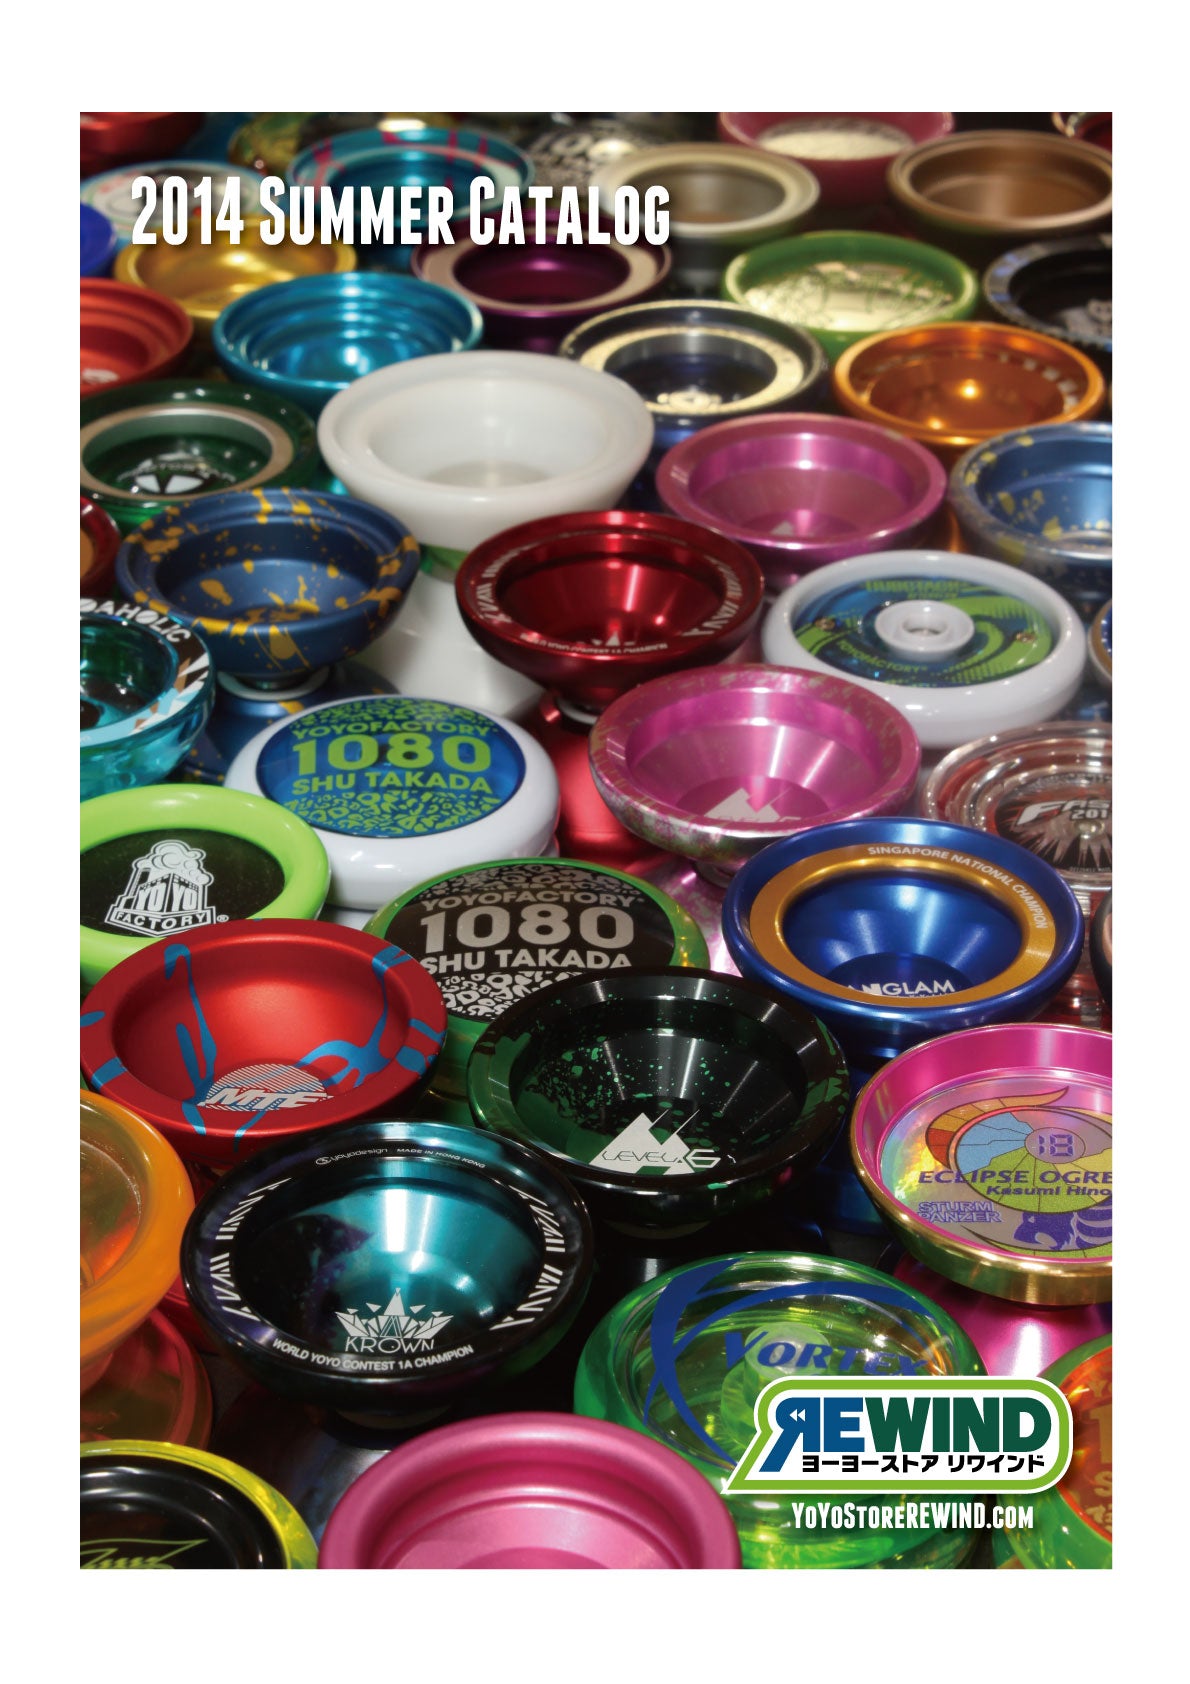 Rewind 2014 Catalog - Rewind